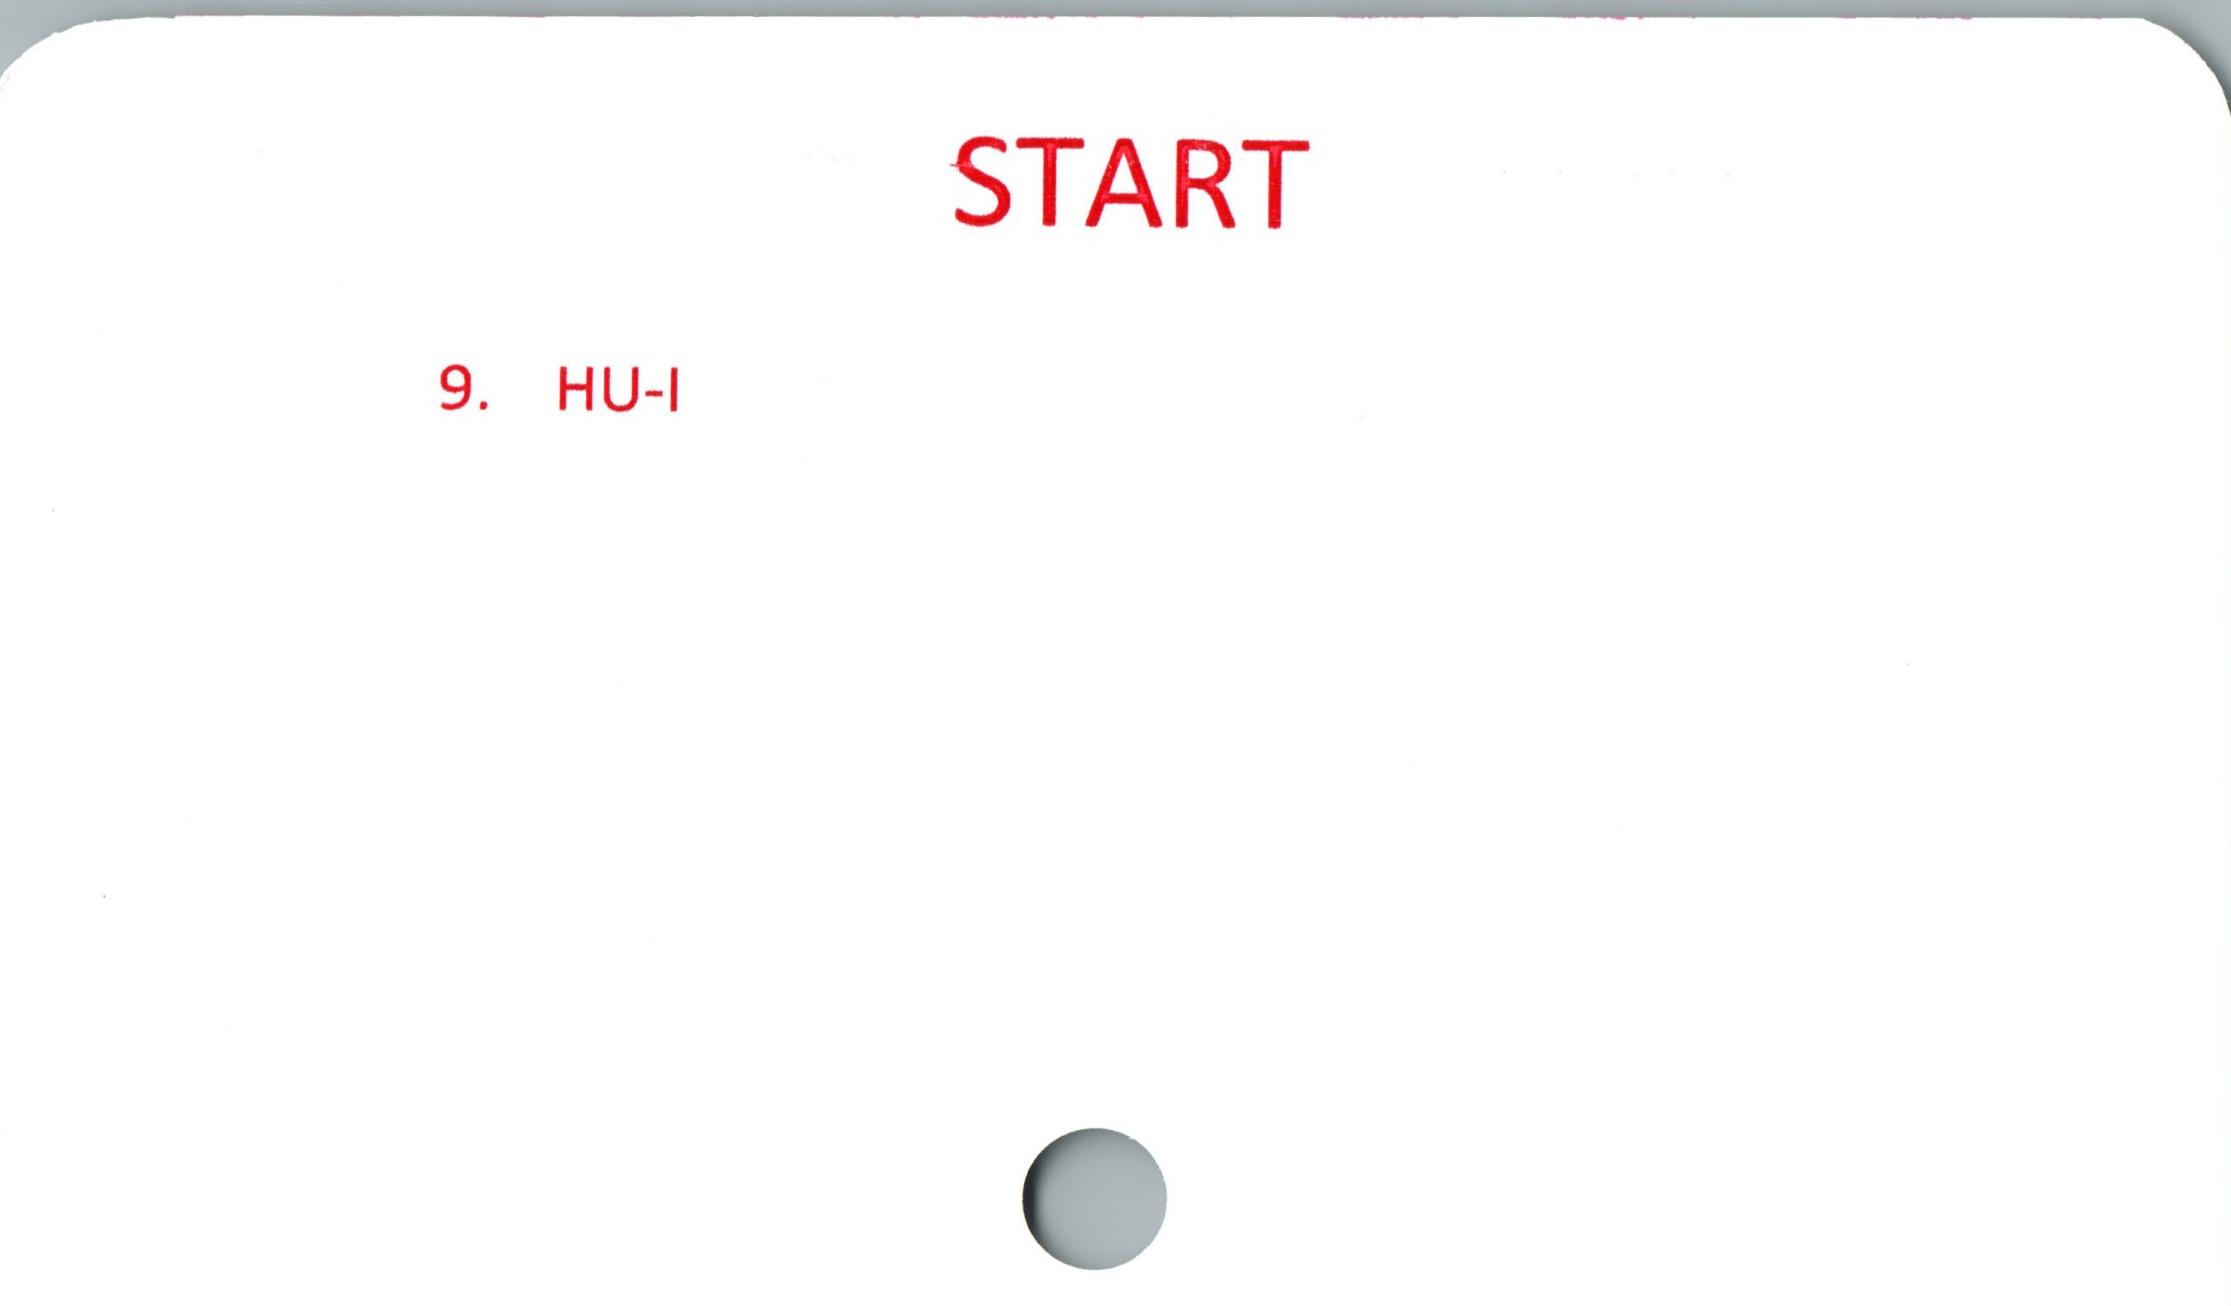 START START

9. HU-I